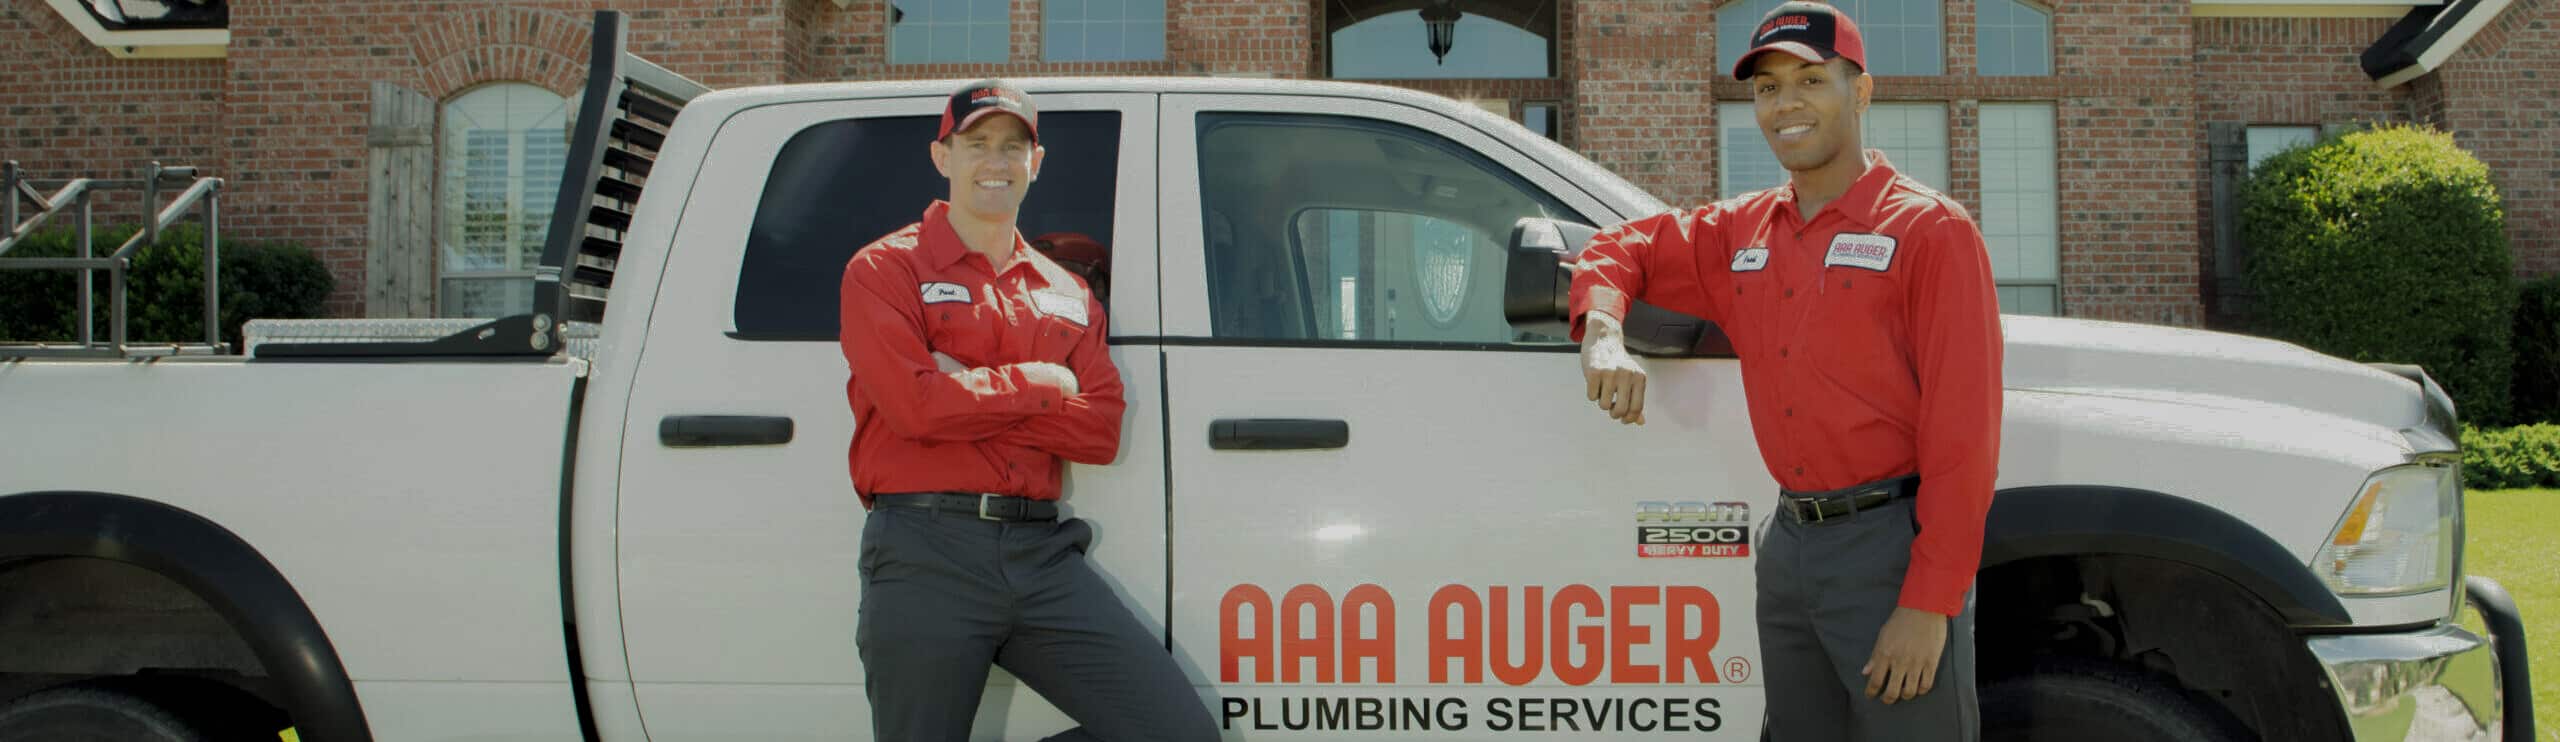 AAA AUGER Plumbing Services –